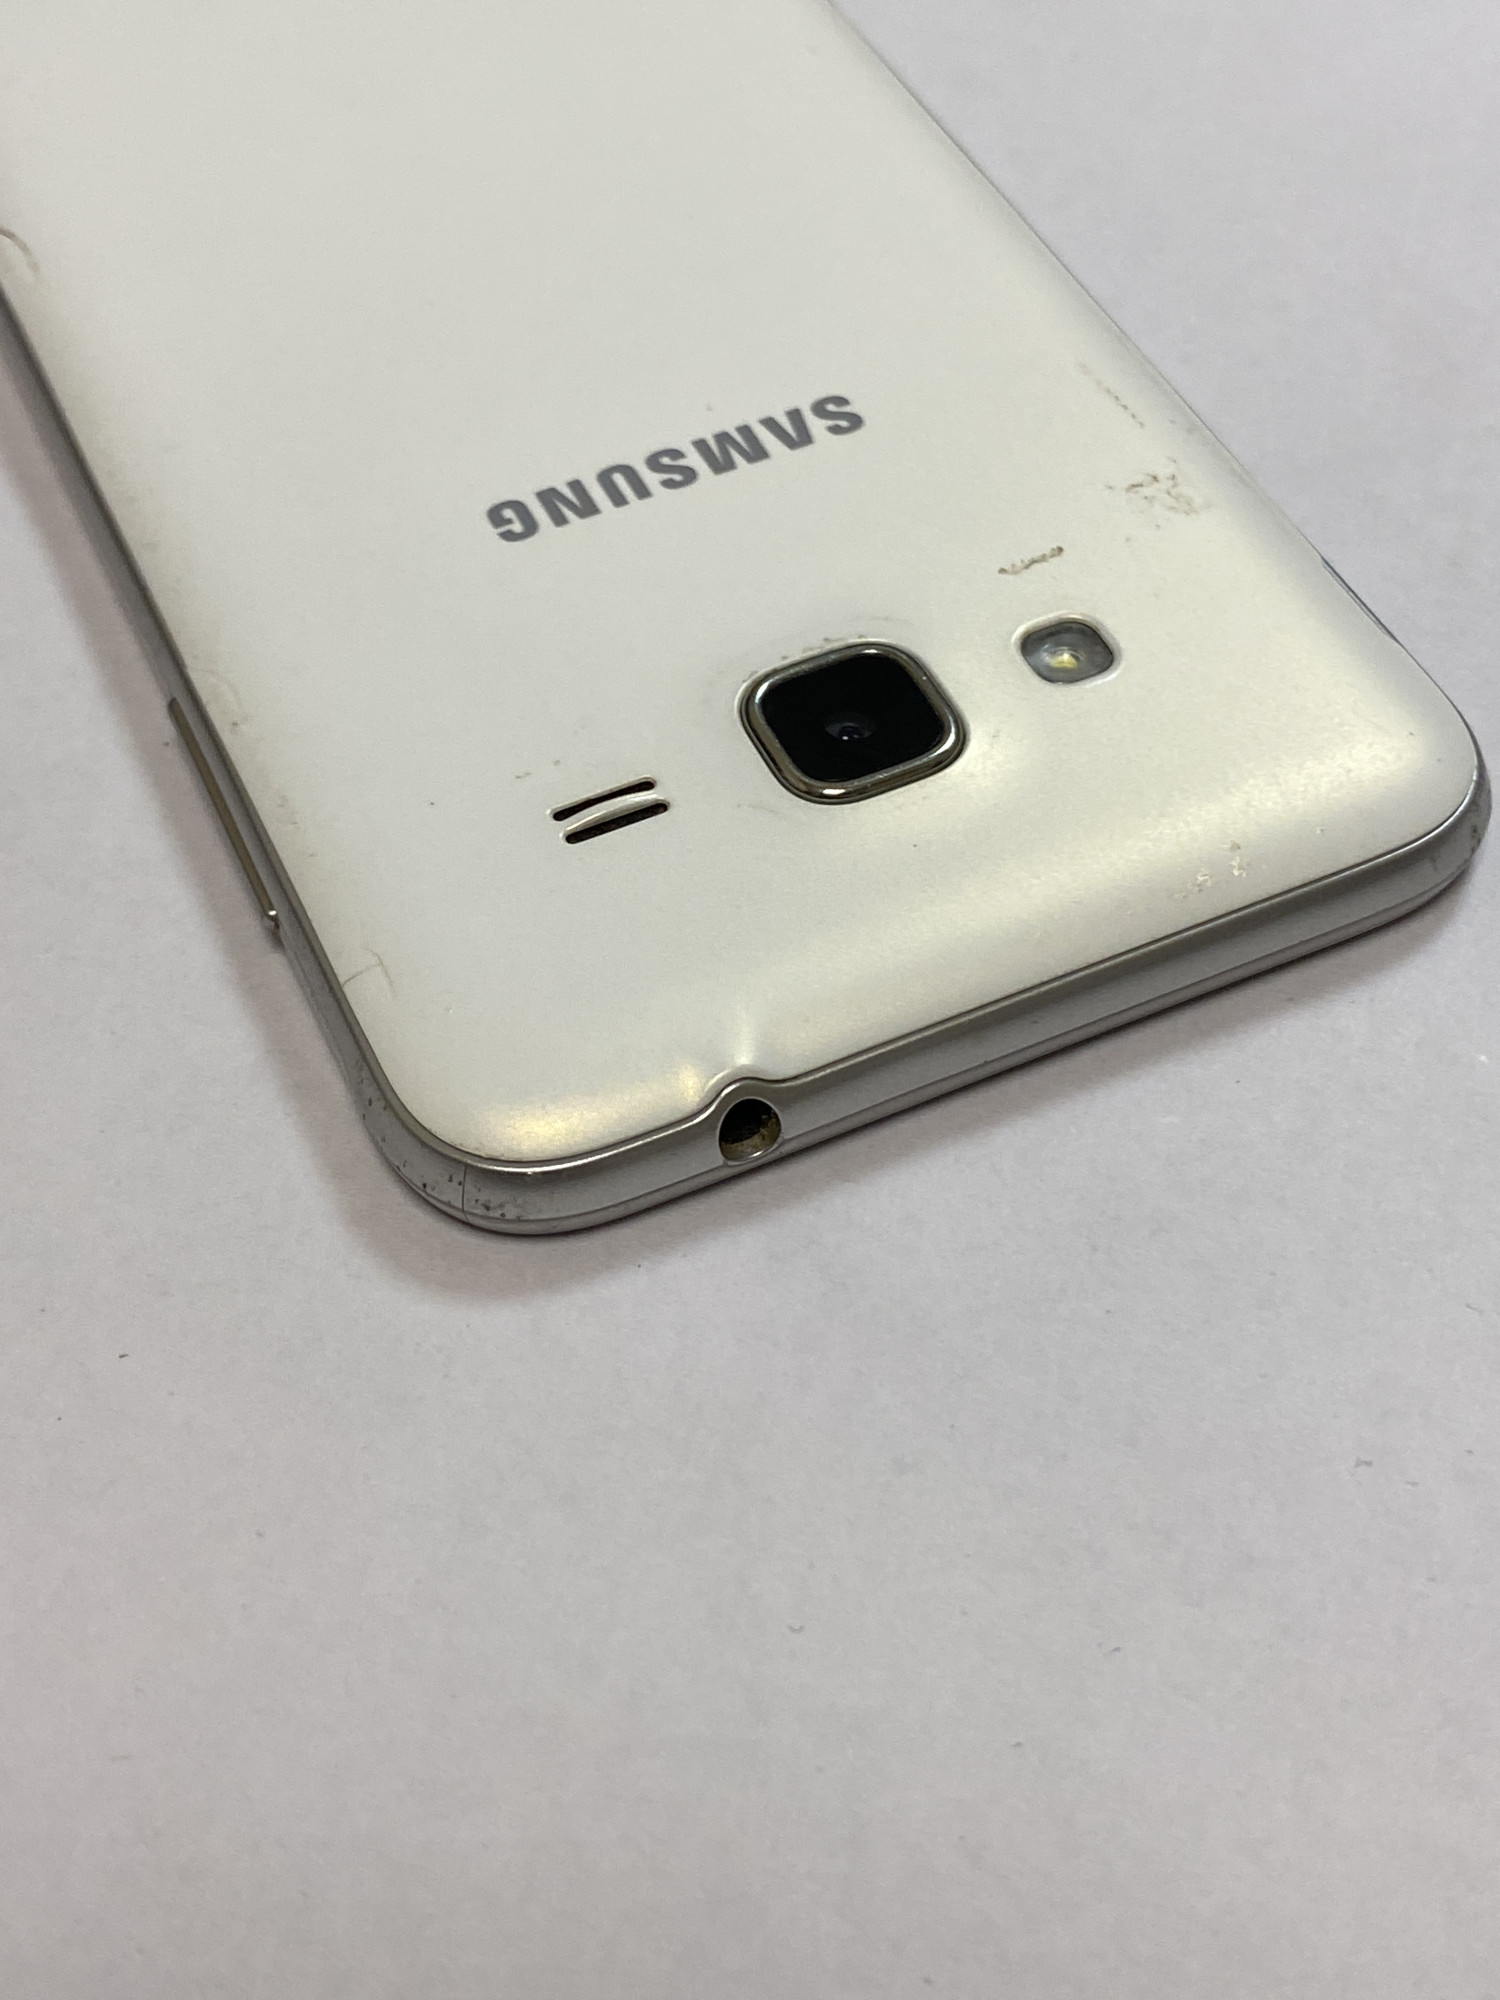 Samsung Galaxy J3 2016 White (SM-J320HZWD) 1/8Gb 3